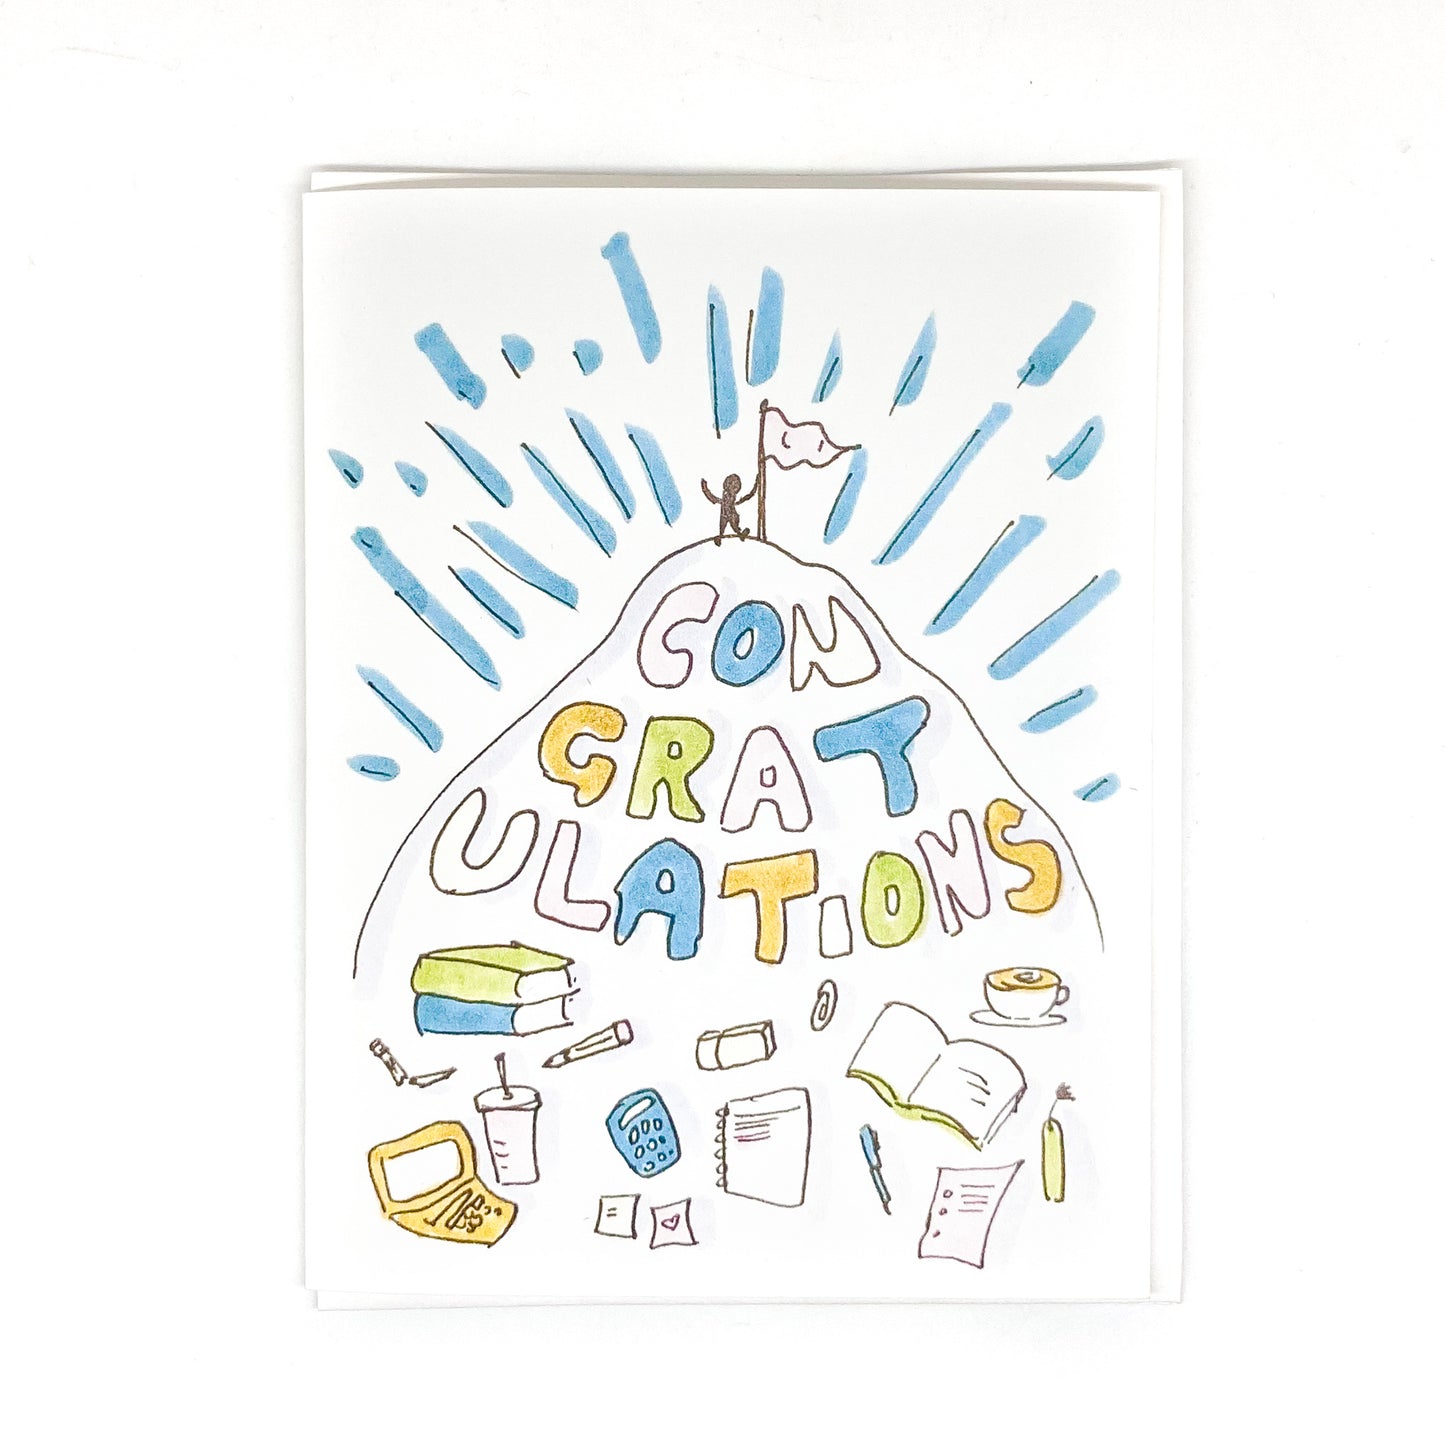 Congratulations Graduation Card